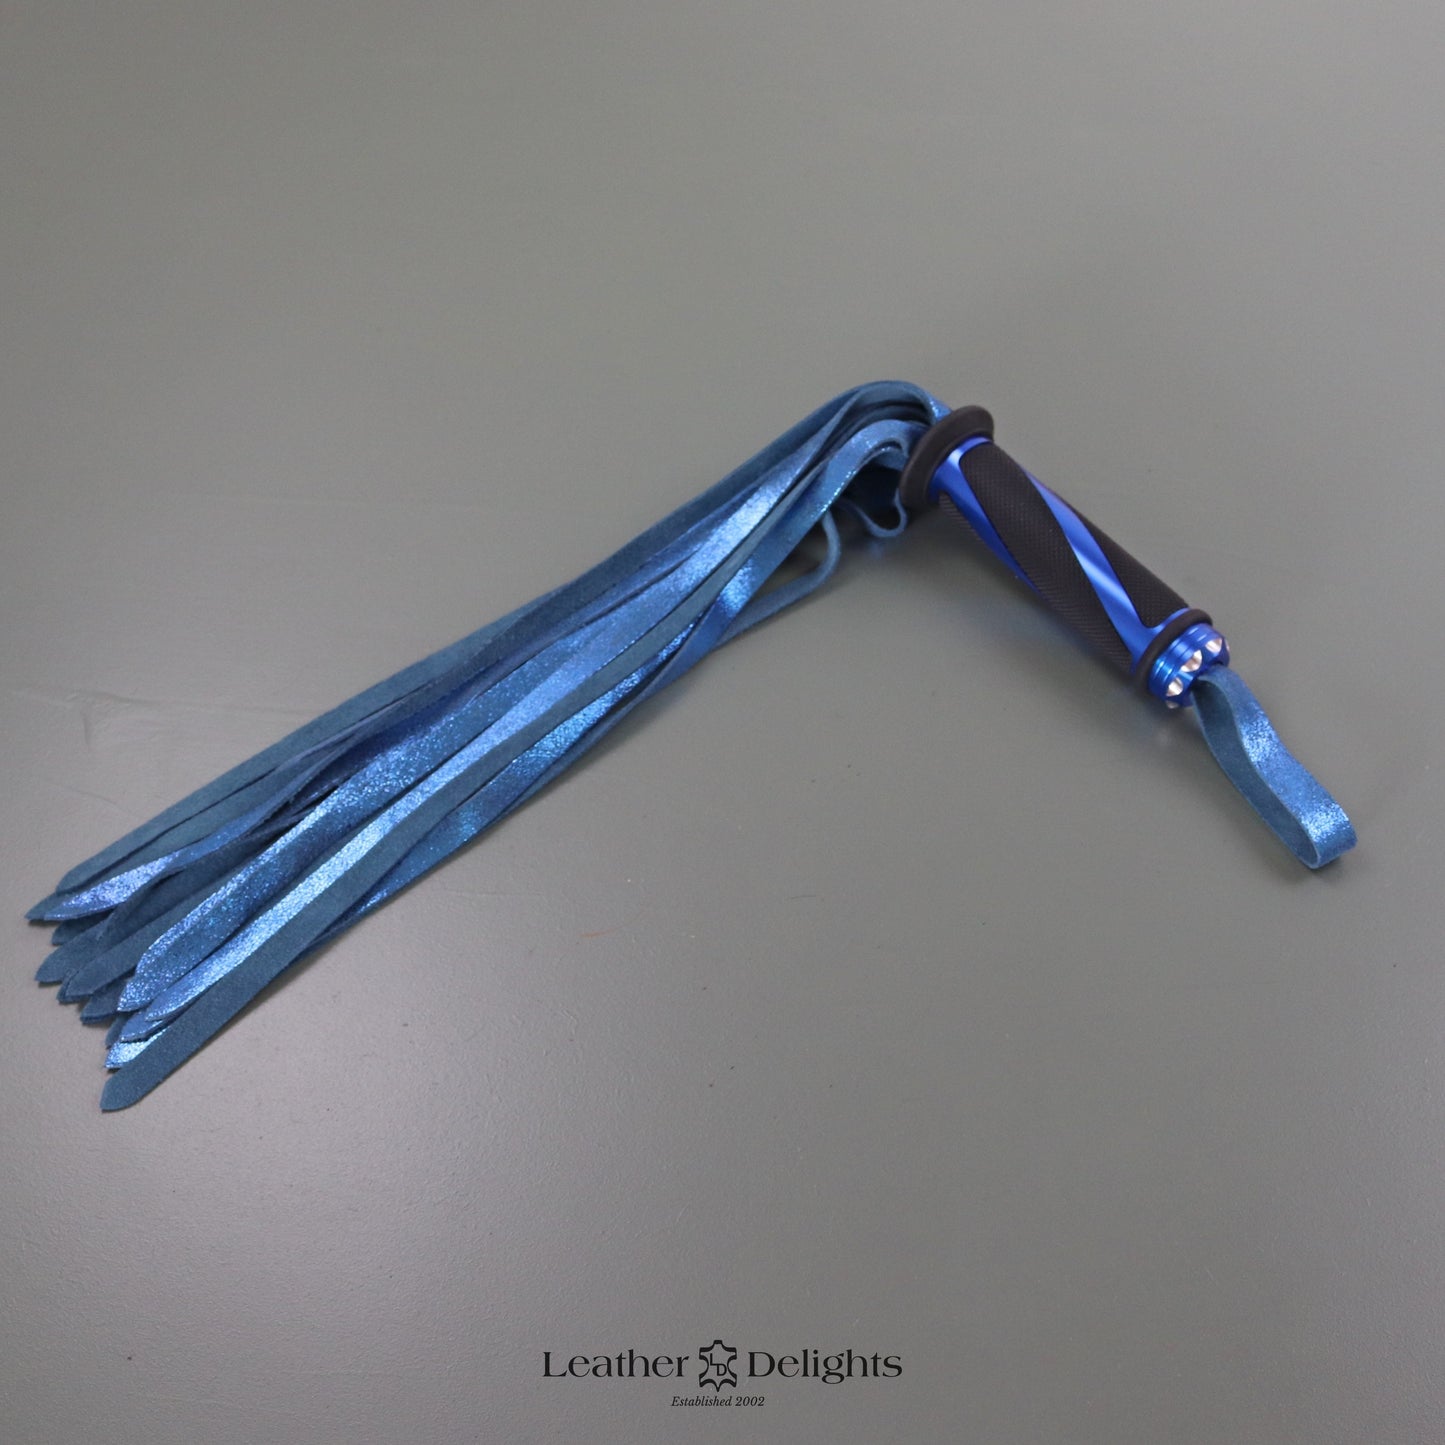 Flogger en daim bleu métallisé avec poignée bleue